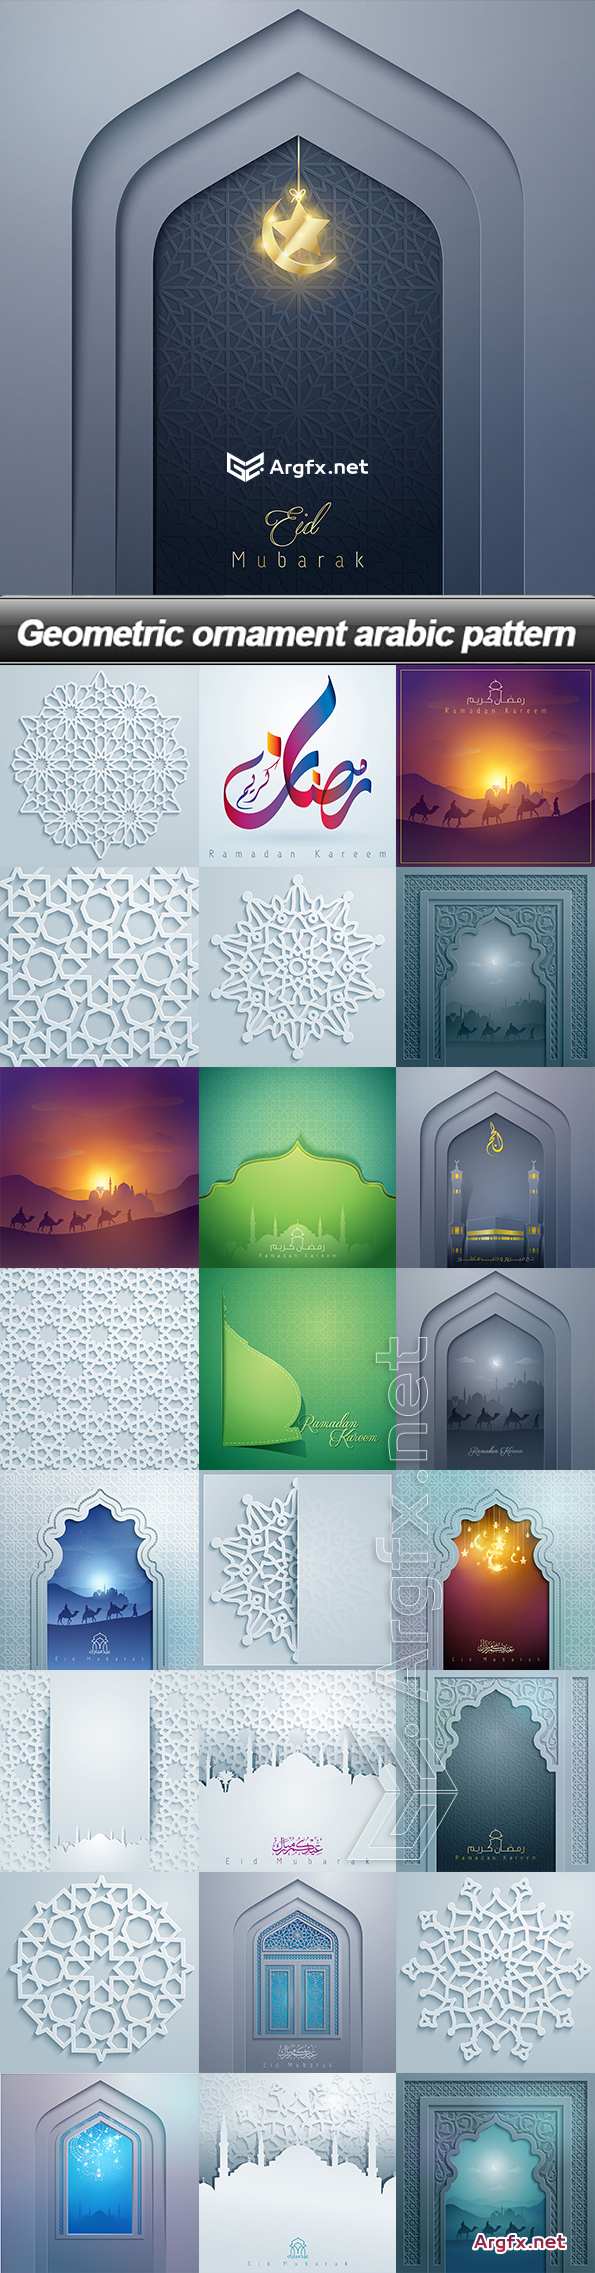 Geometric ornament arabic pattern - 25 EPS